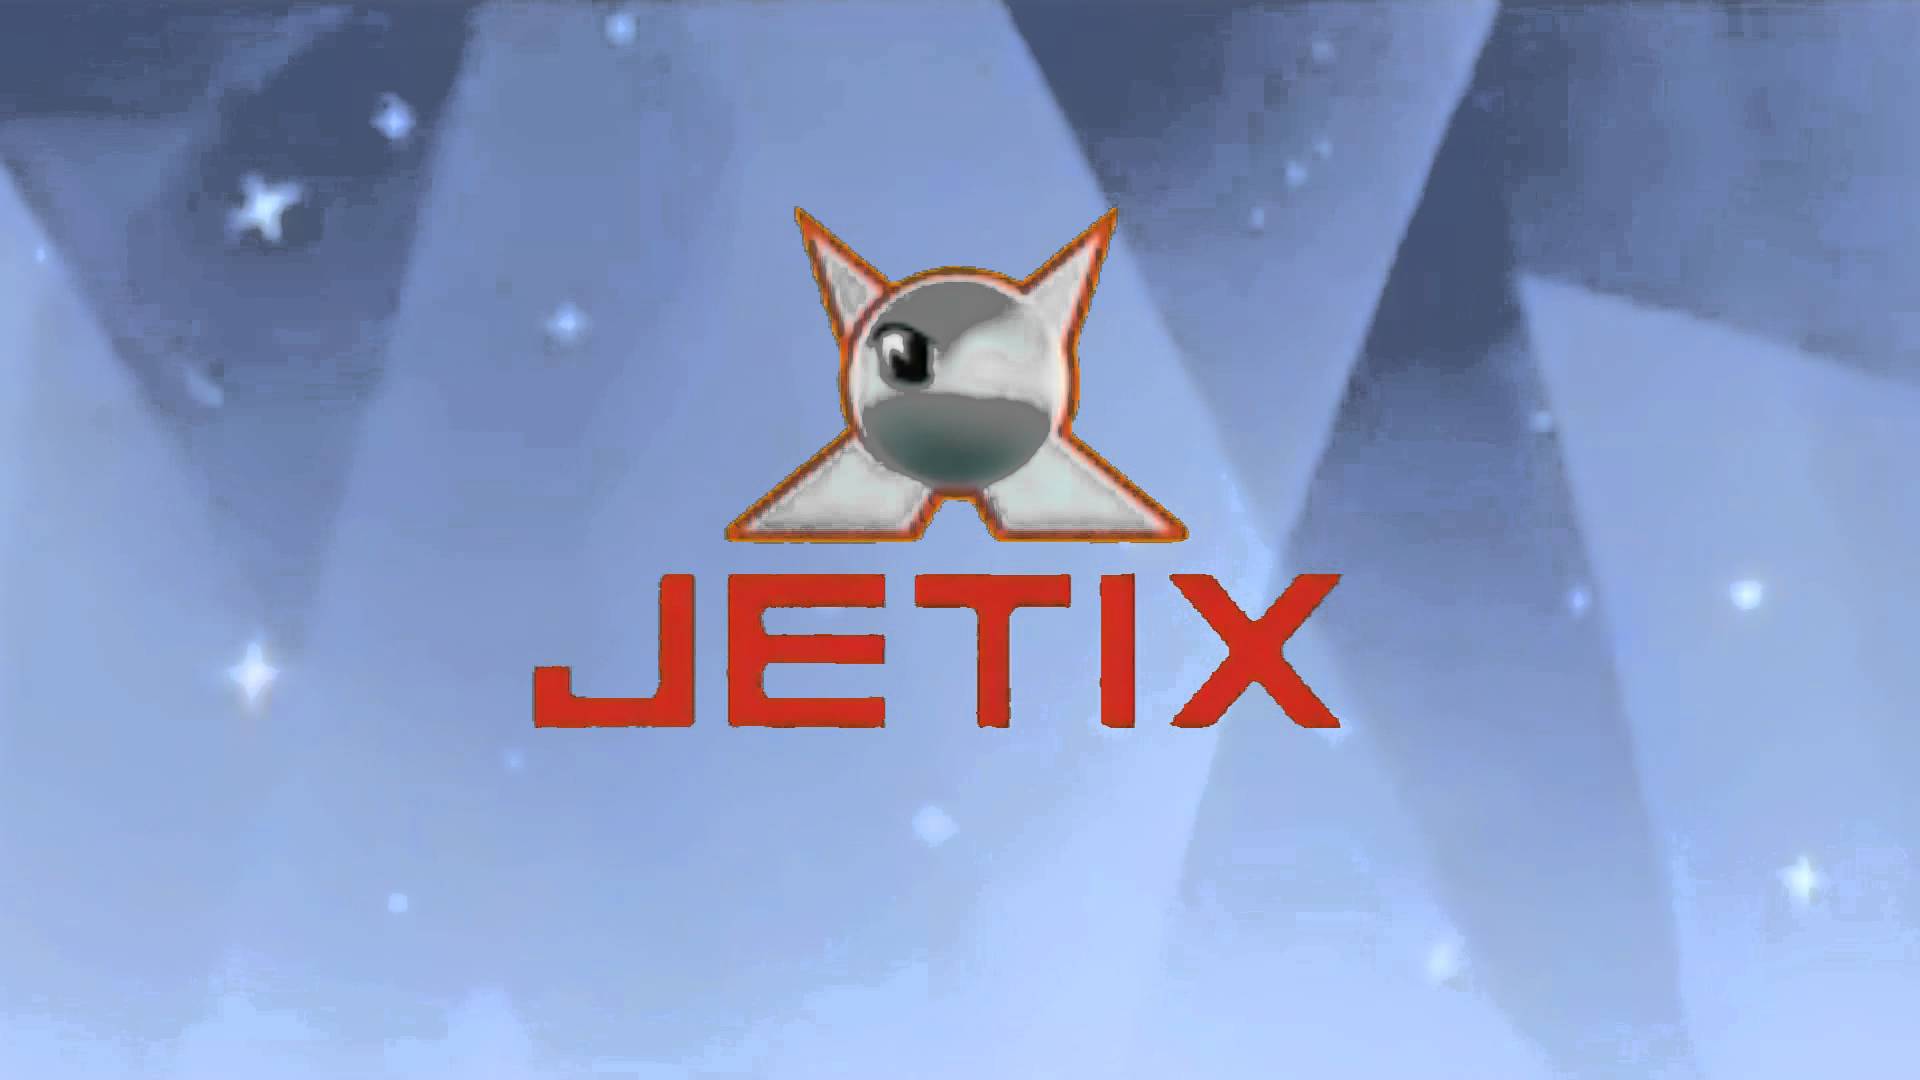 Jetix Wallpaper. Jetix Wallpaper